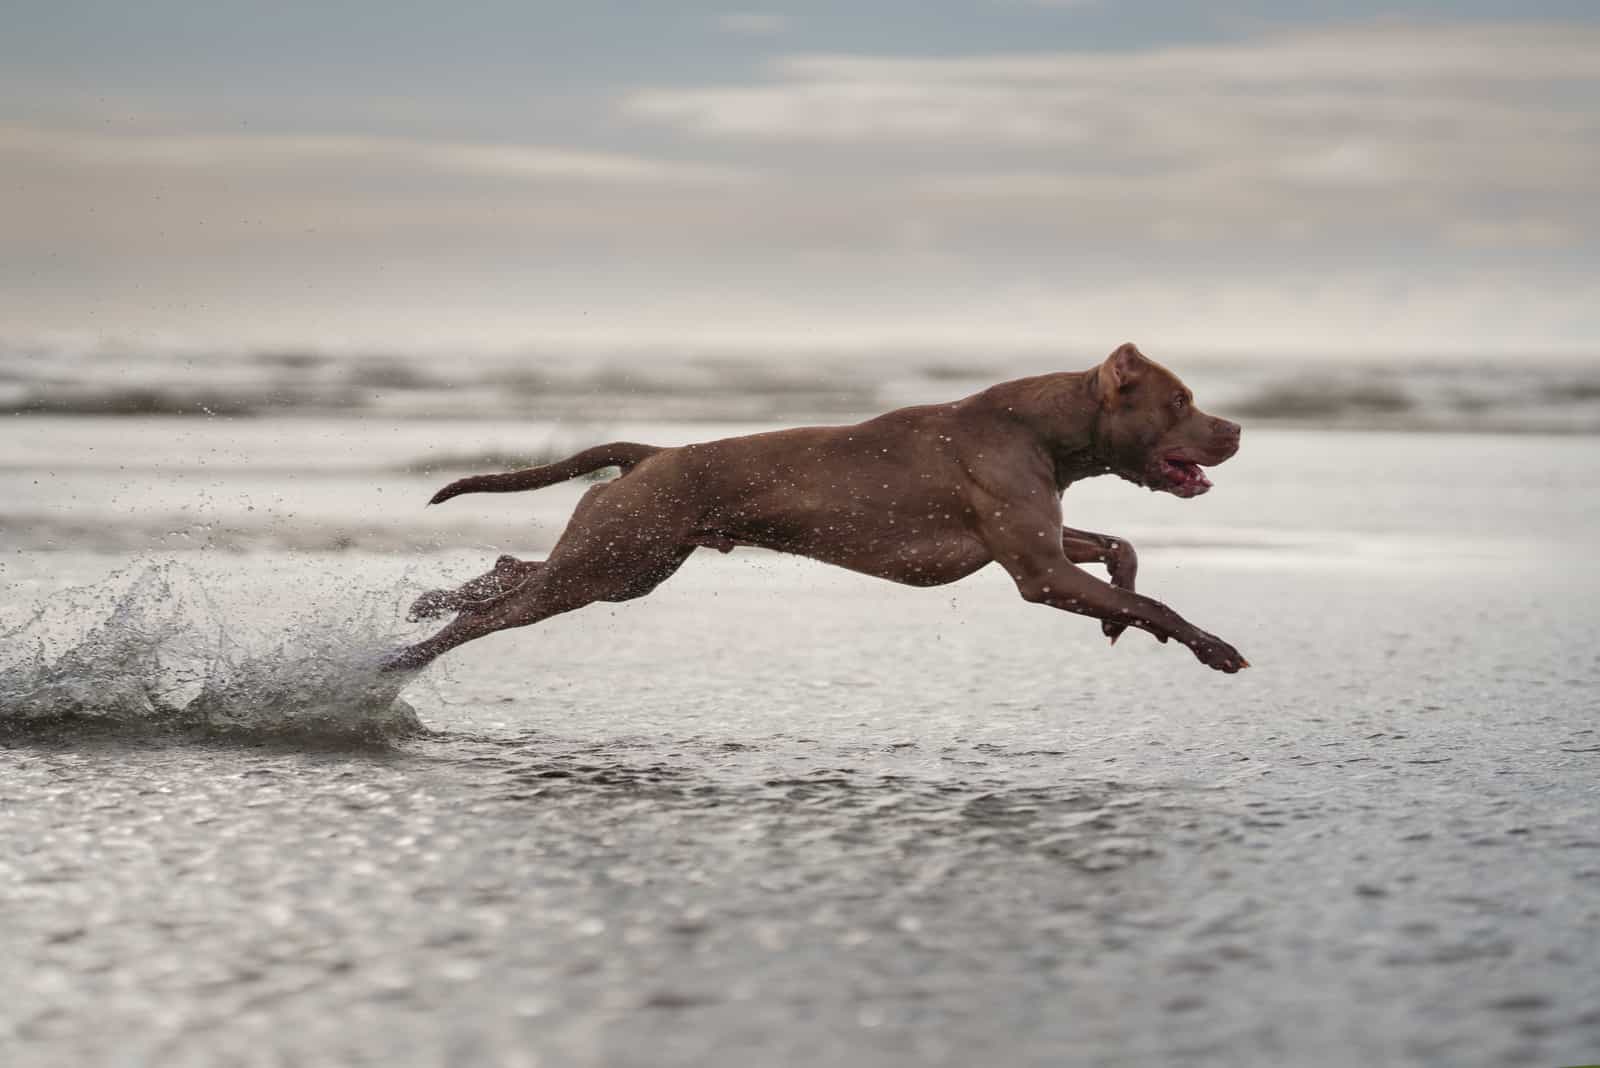 Brown Pitbull runs in shallow seawater